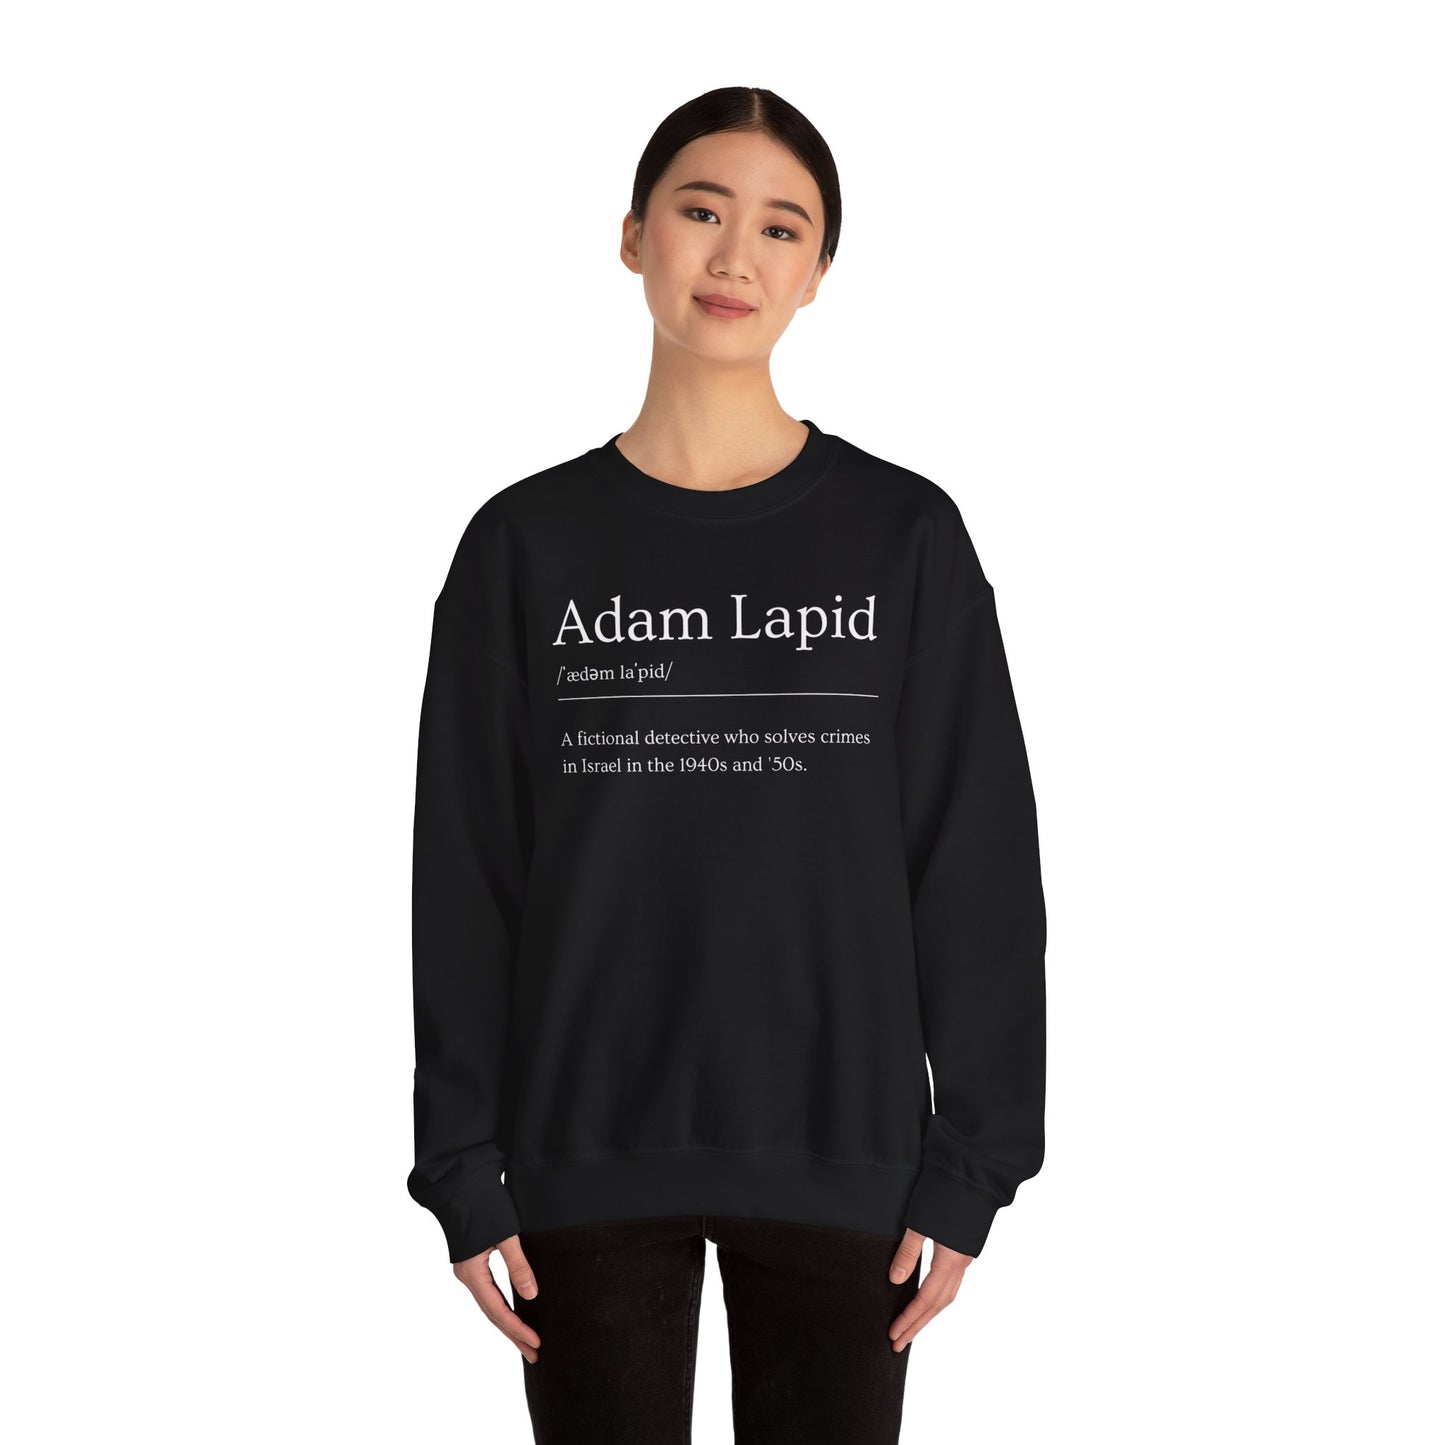 Unisex Crewneck Sweatshirt with a Tongue-in-cheek Definition of Adam Lapid